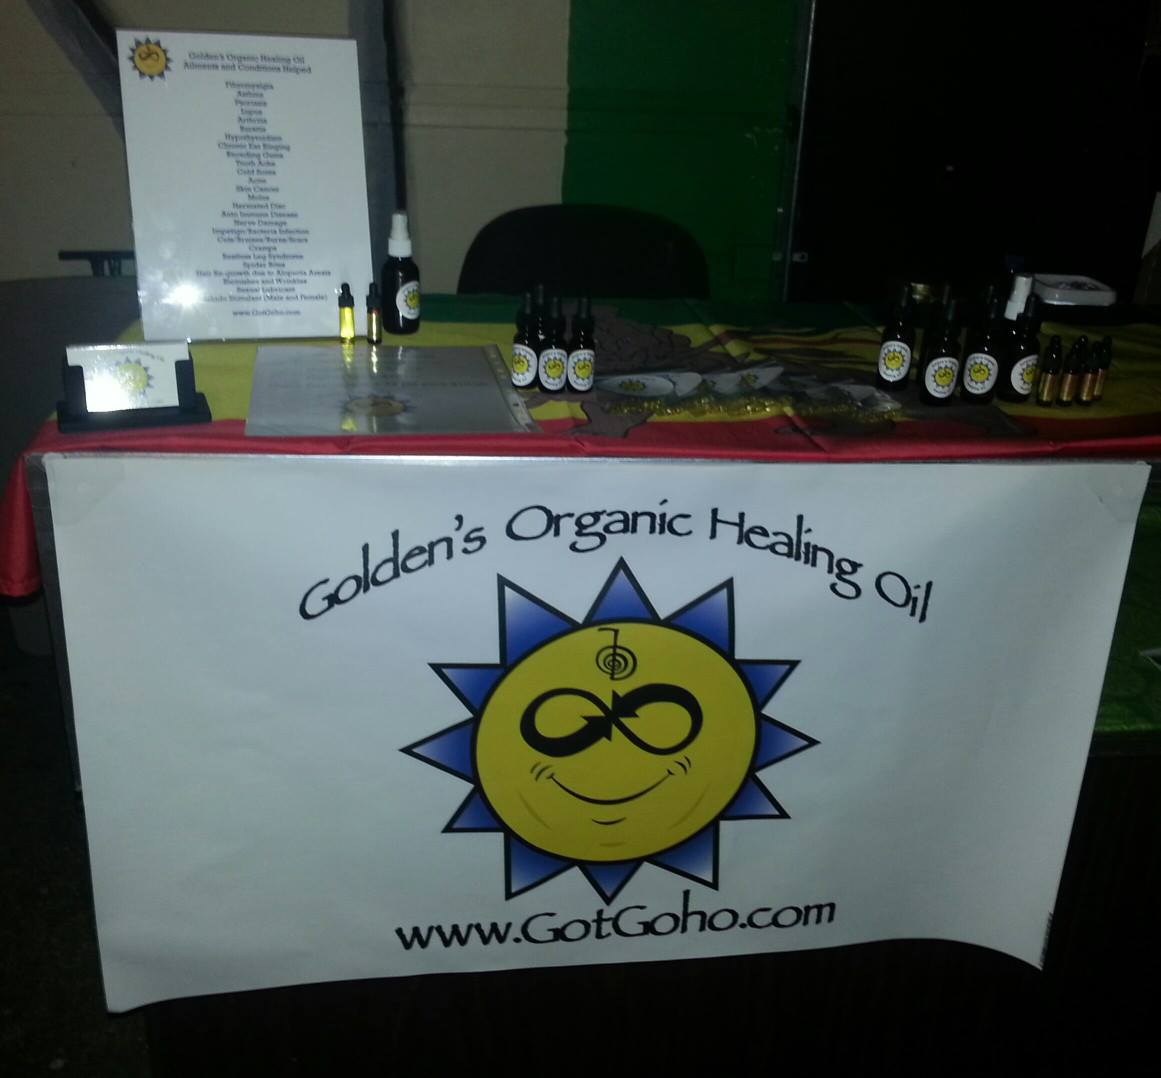 Product Review: Golden Organic Healing Oil - Weedist